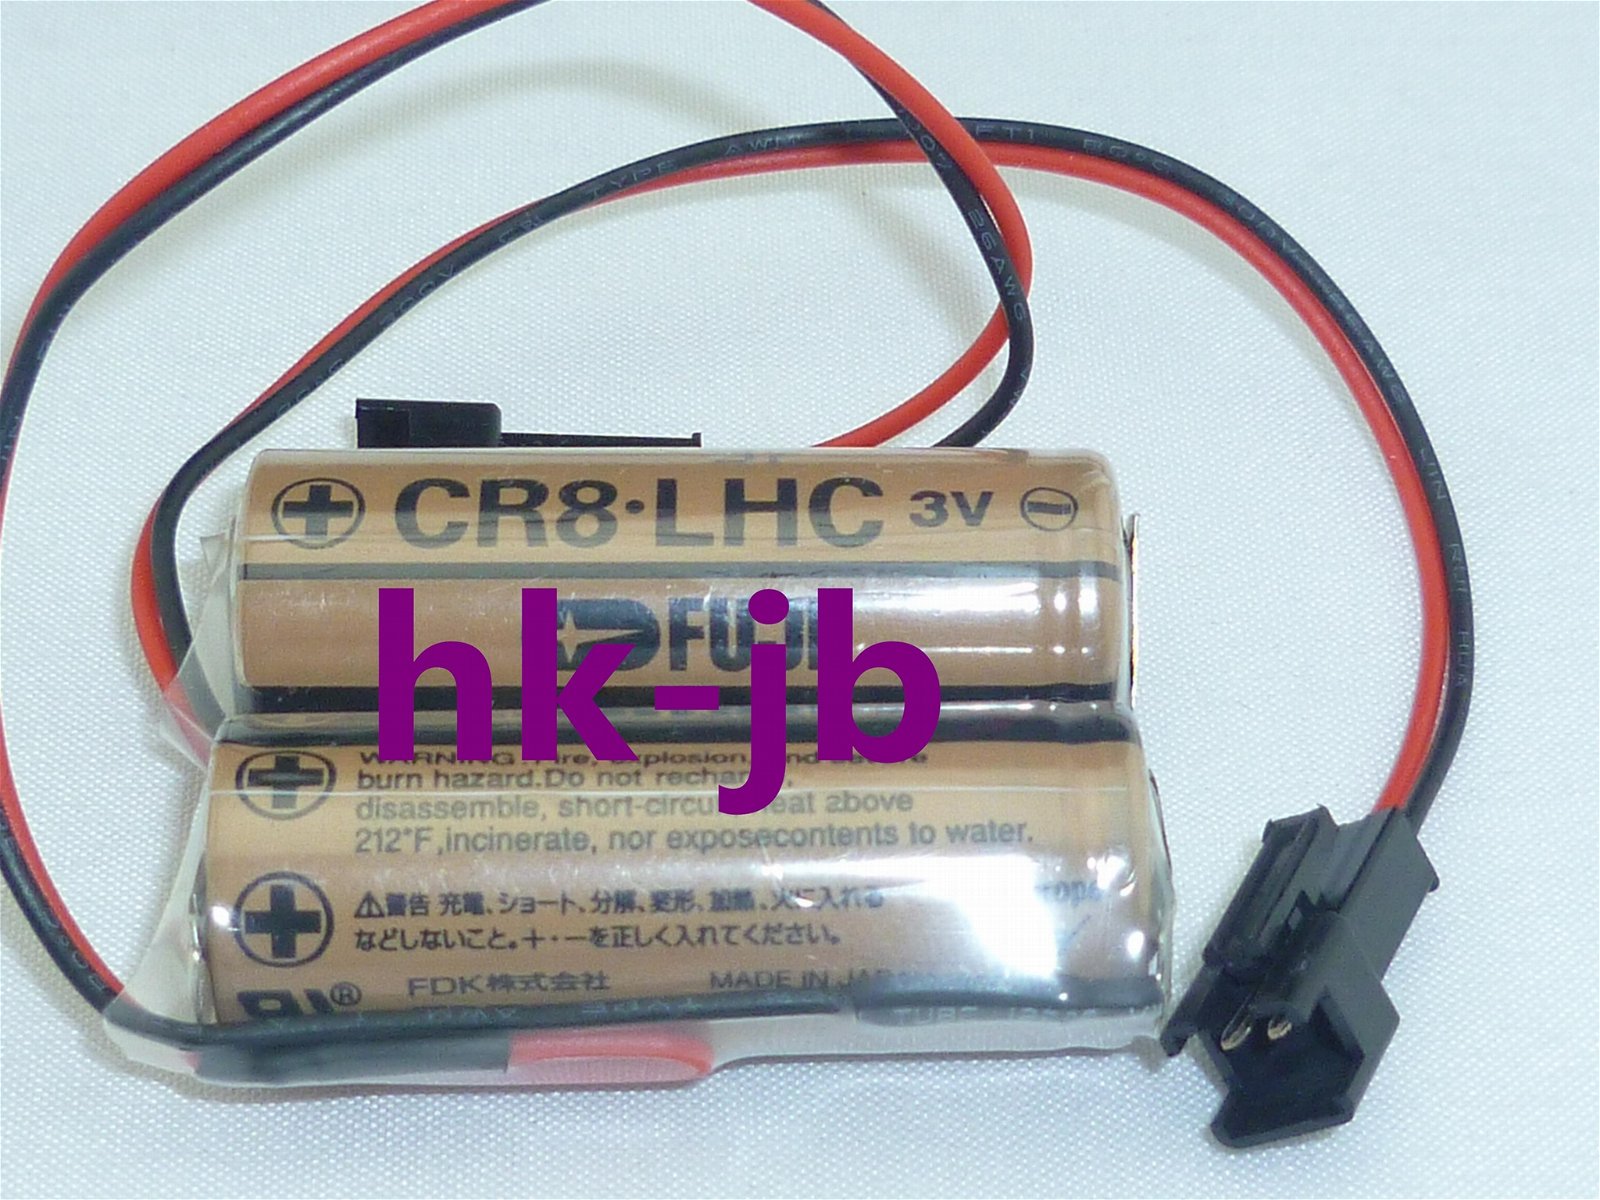 FUJI(FDK) CR8.LHC 2600mAh 3v Lithium Battery made in Japan 2